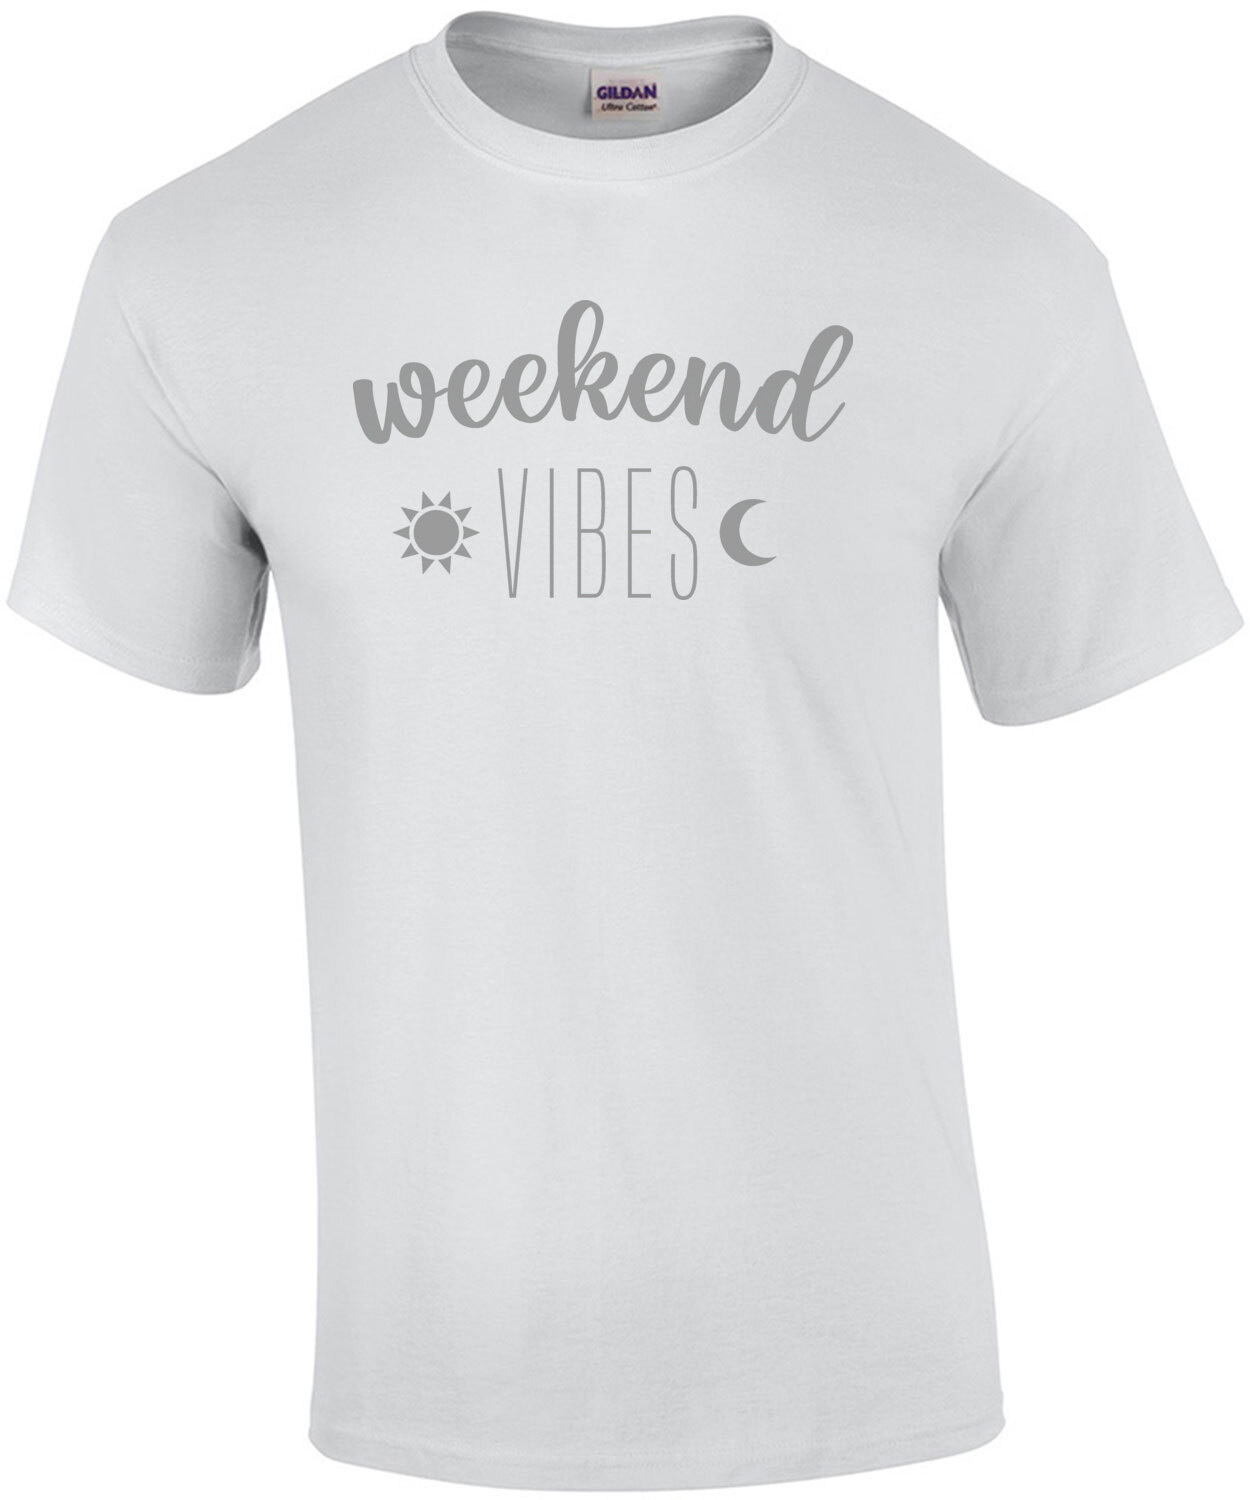 weekend vibes - t-shirt